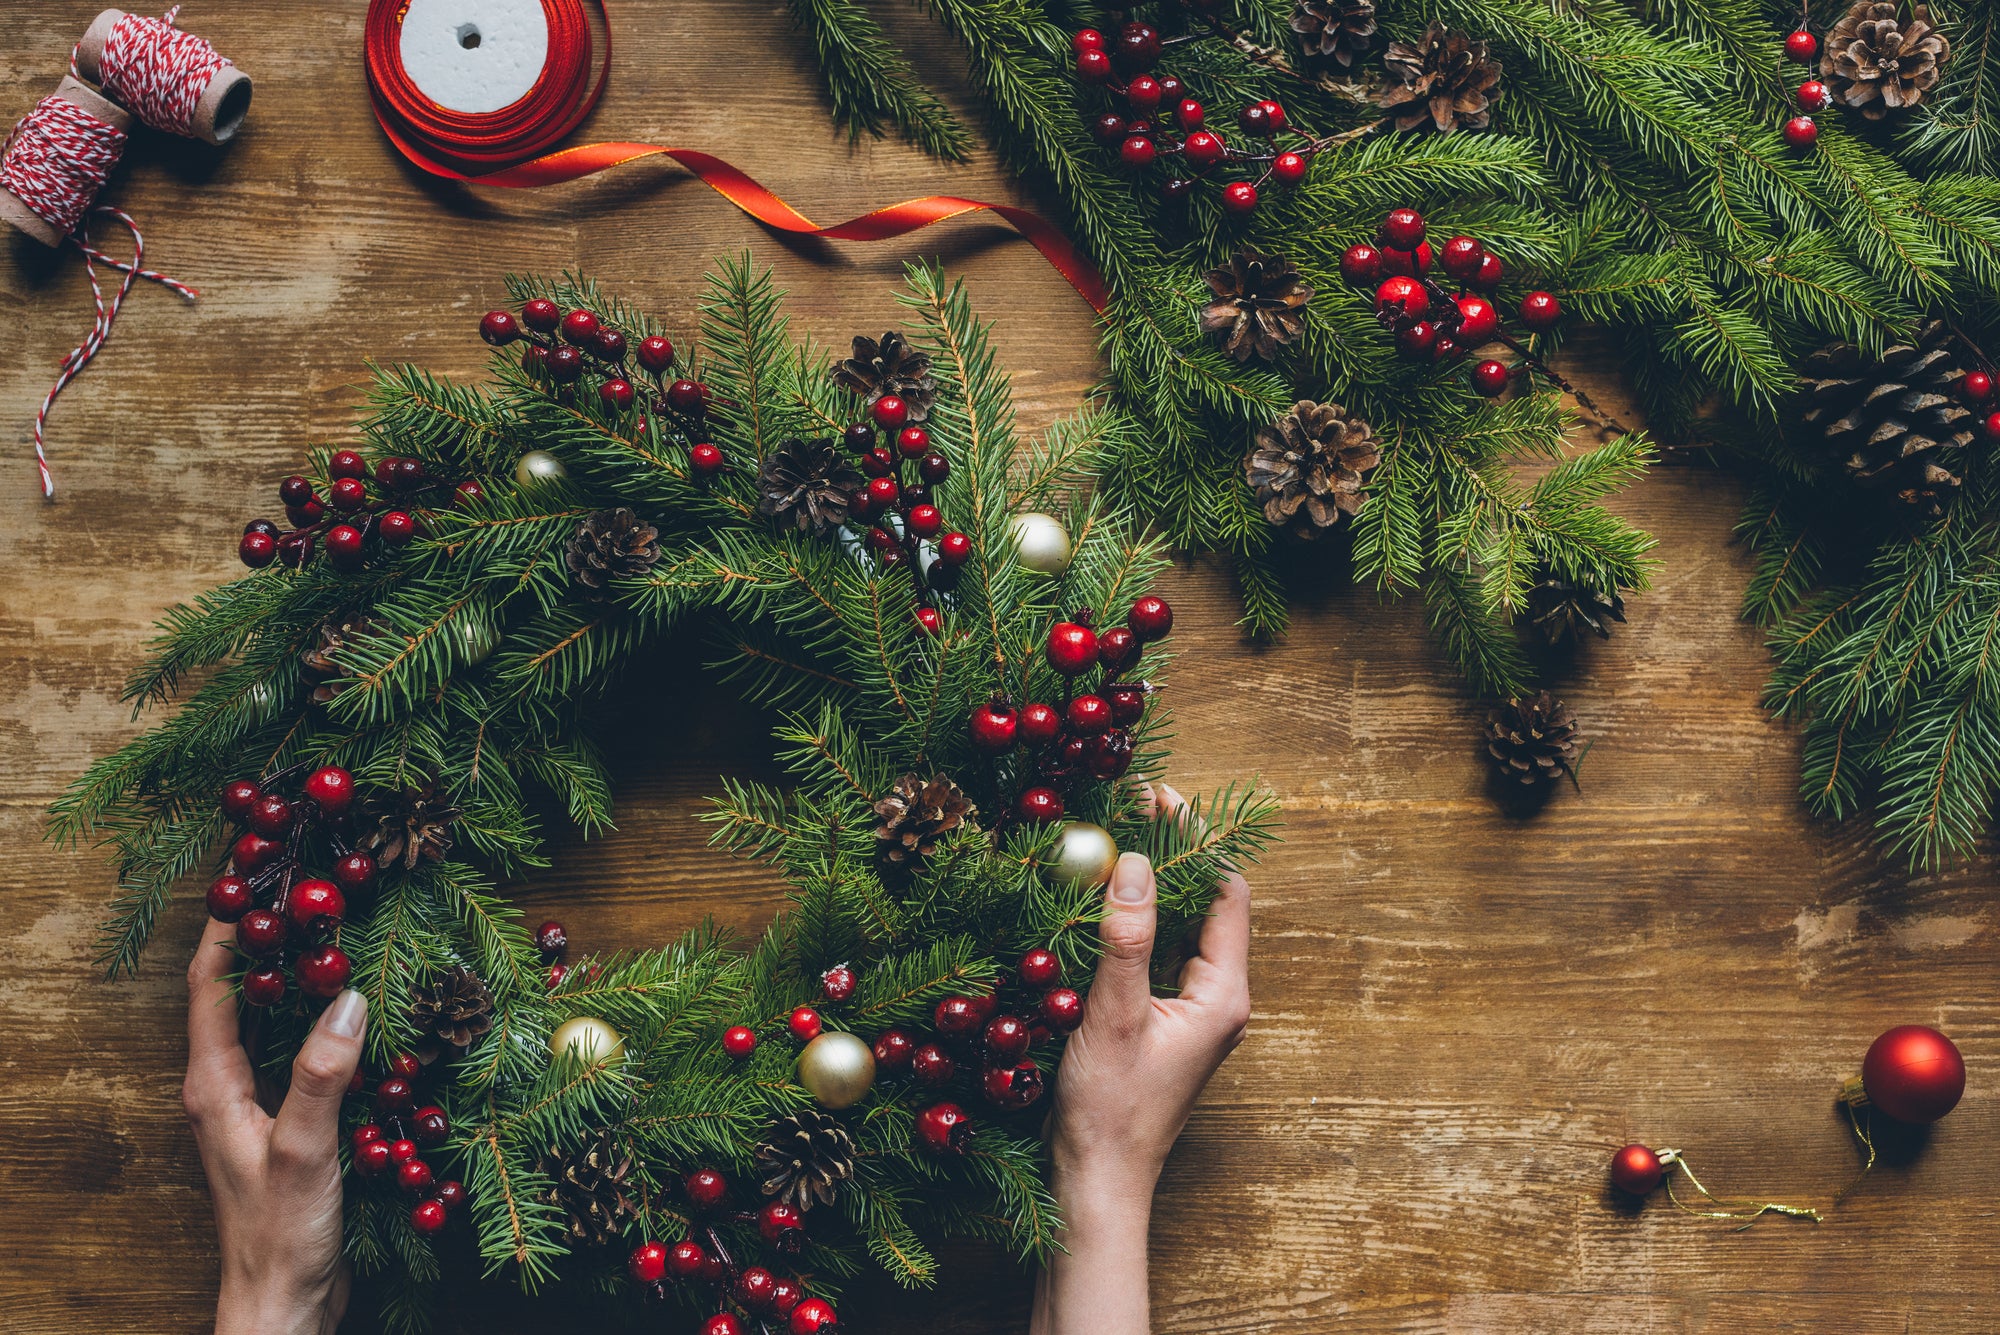 Creating Your Christmas Wreath